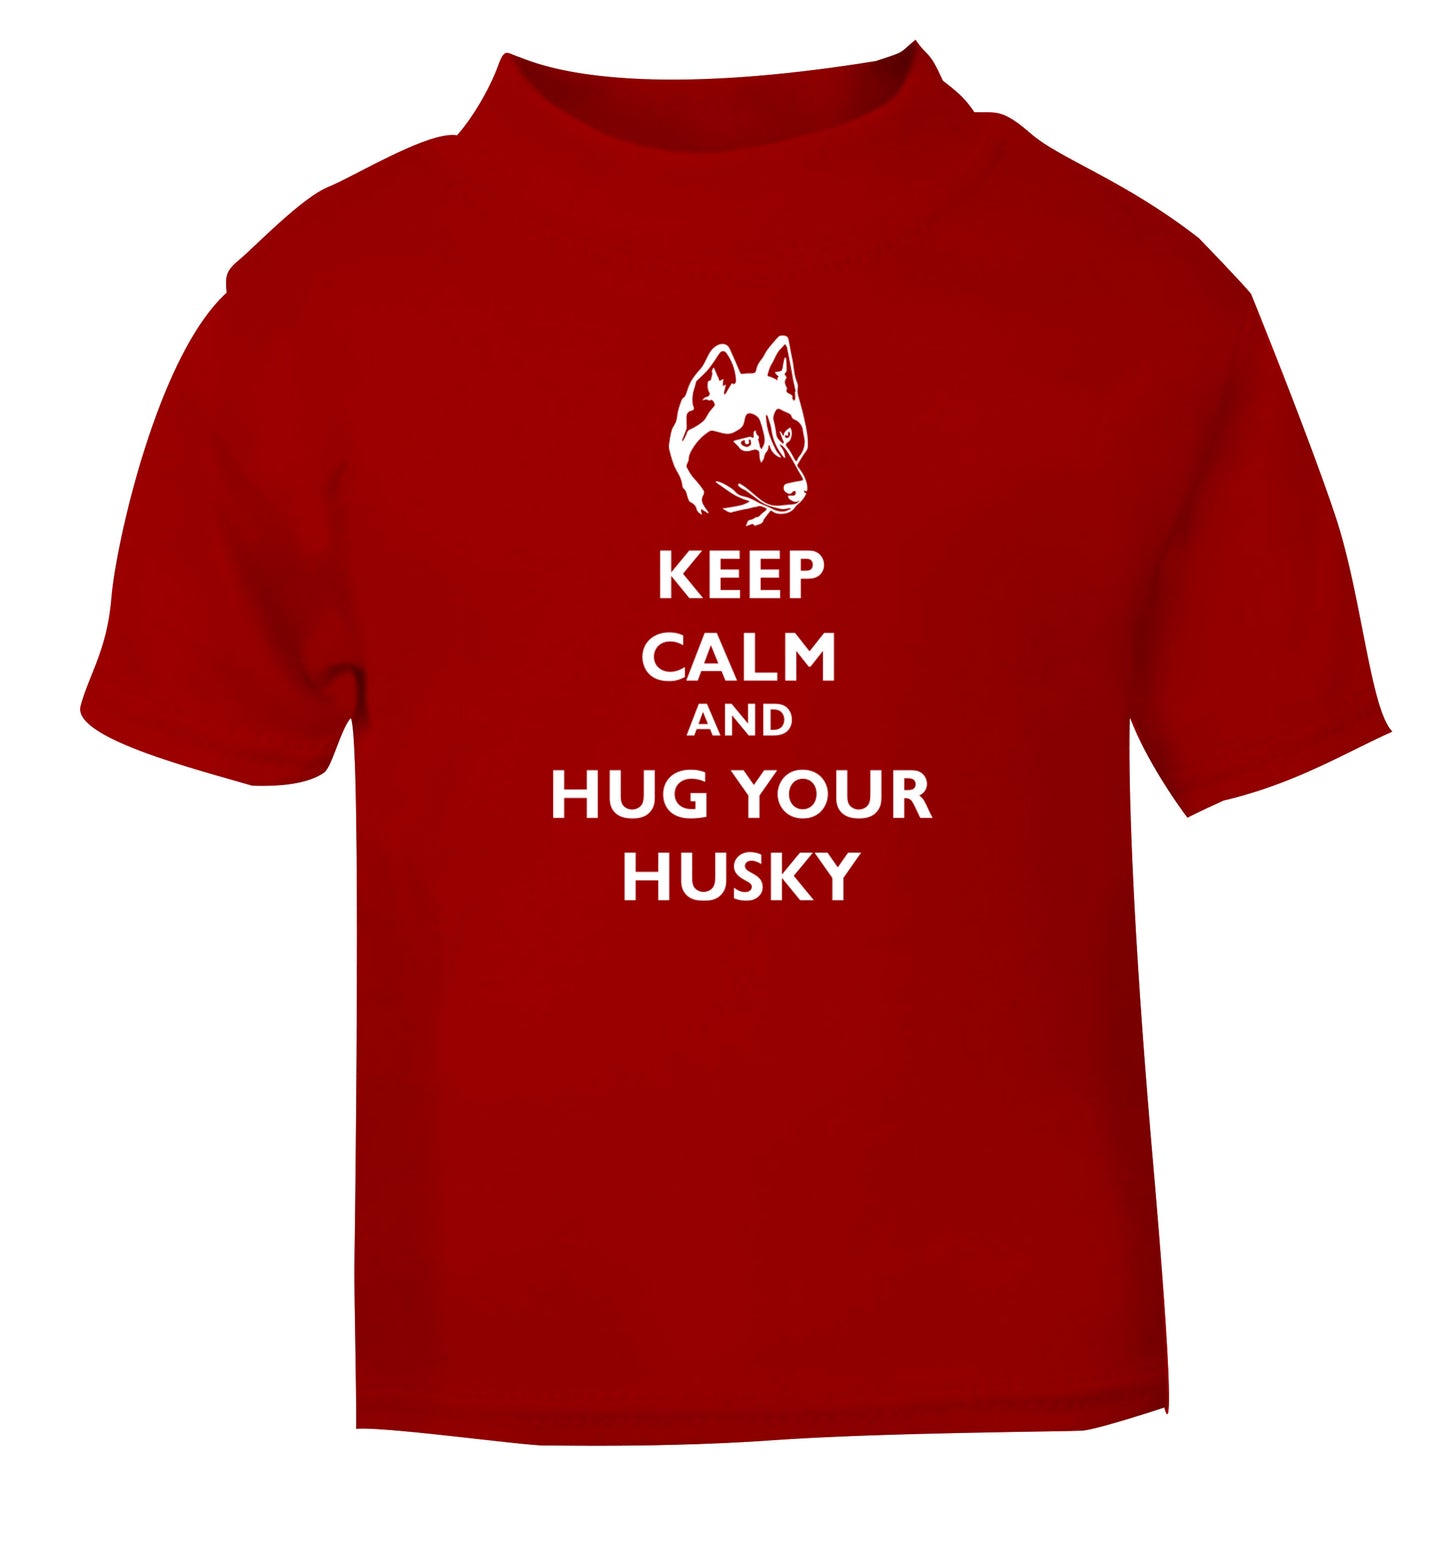 Keep calm and hug your husky red Baby Toddler Tshirt 2 Years